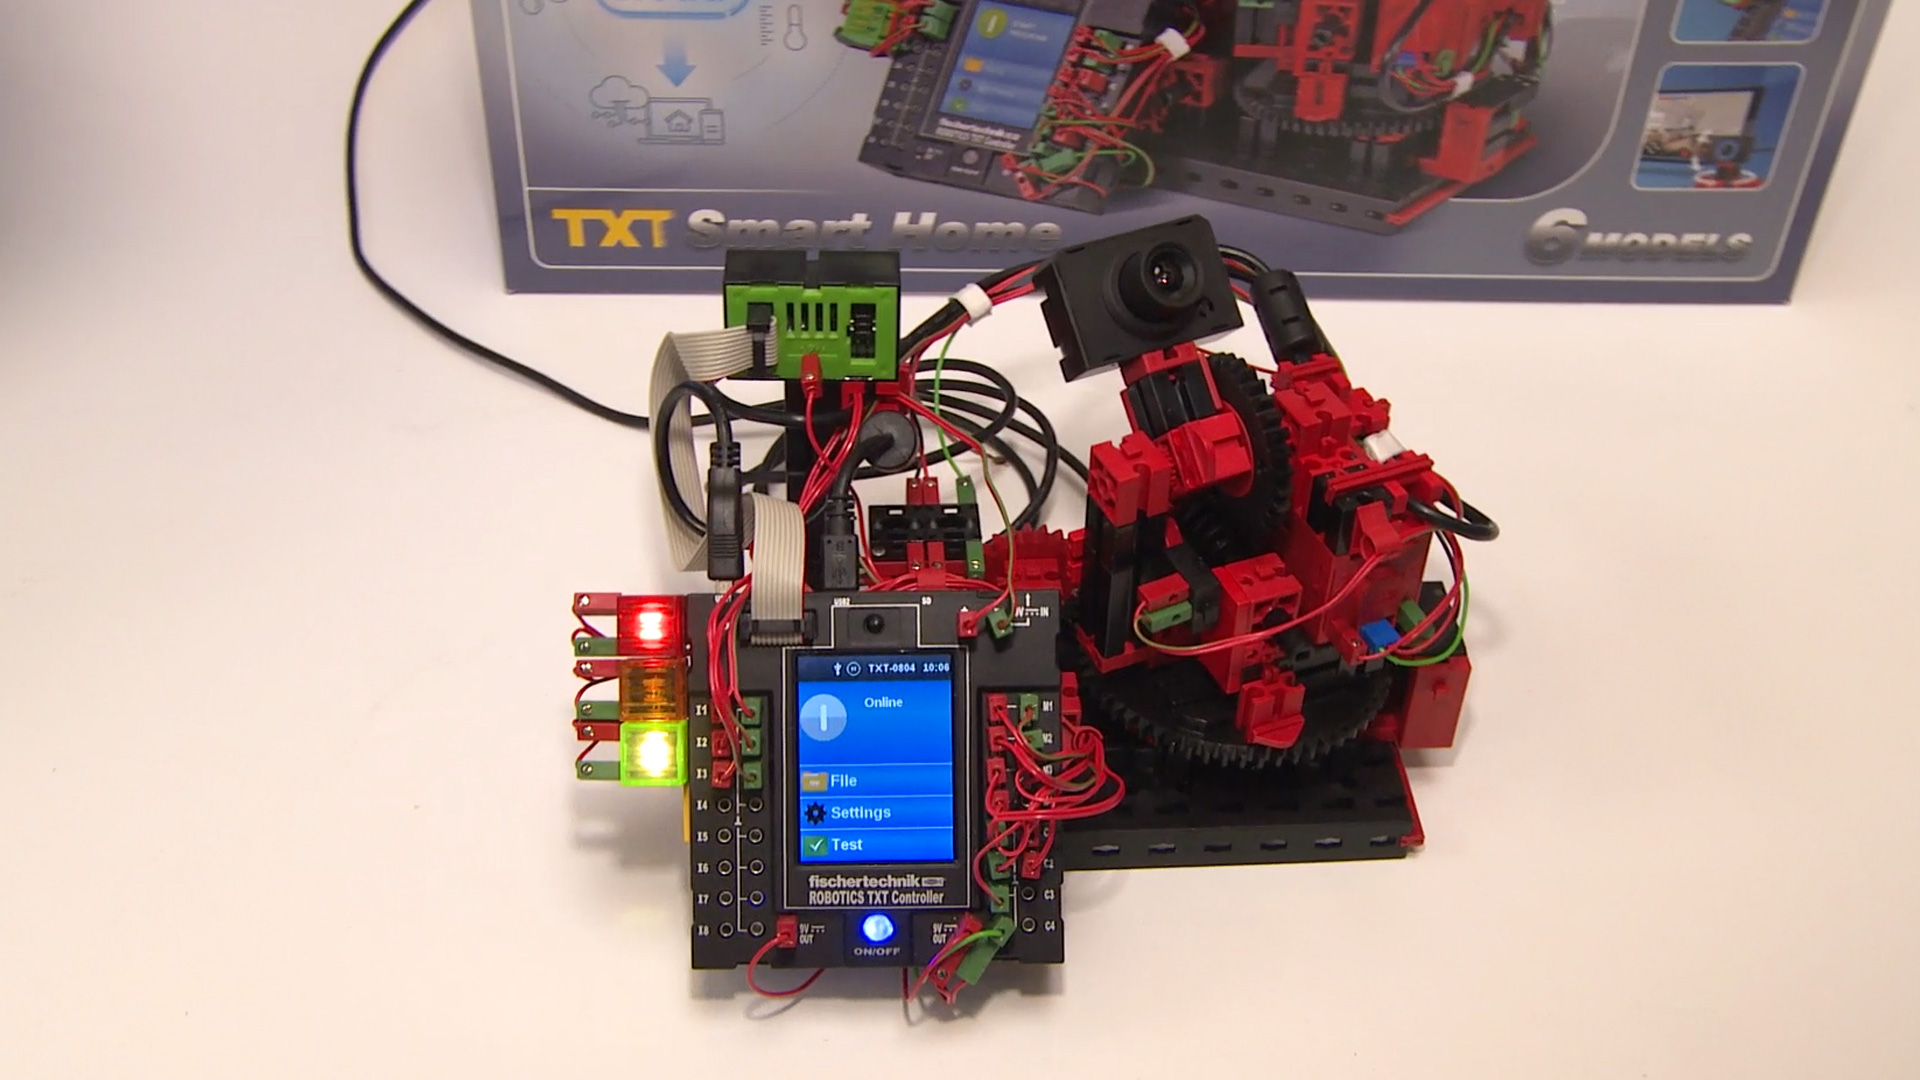 Fischertechnik robotics controller internet of things toy